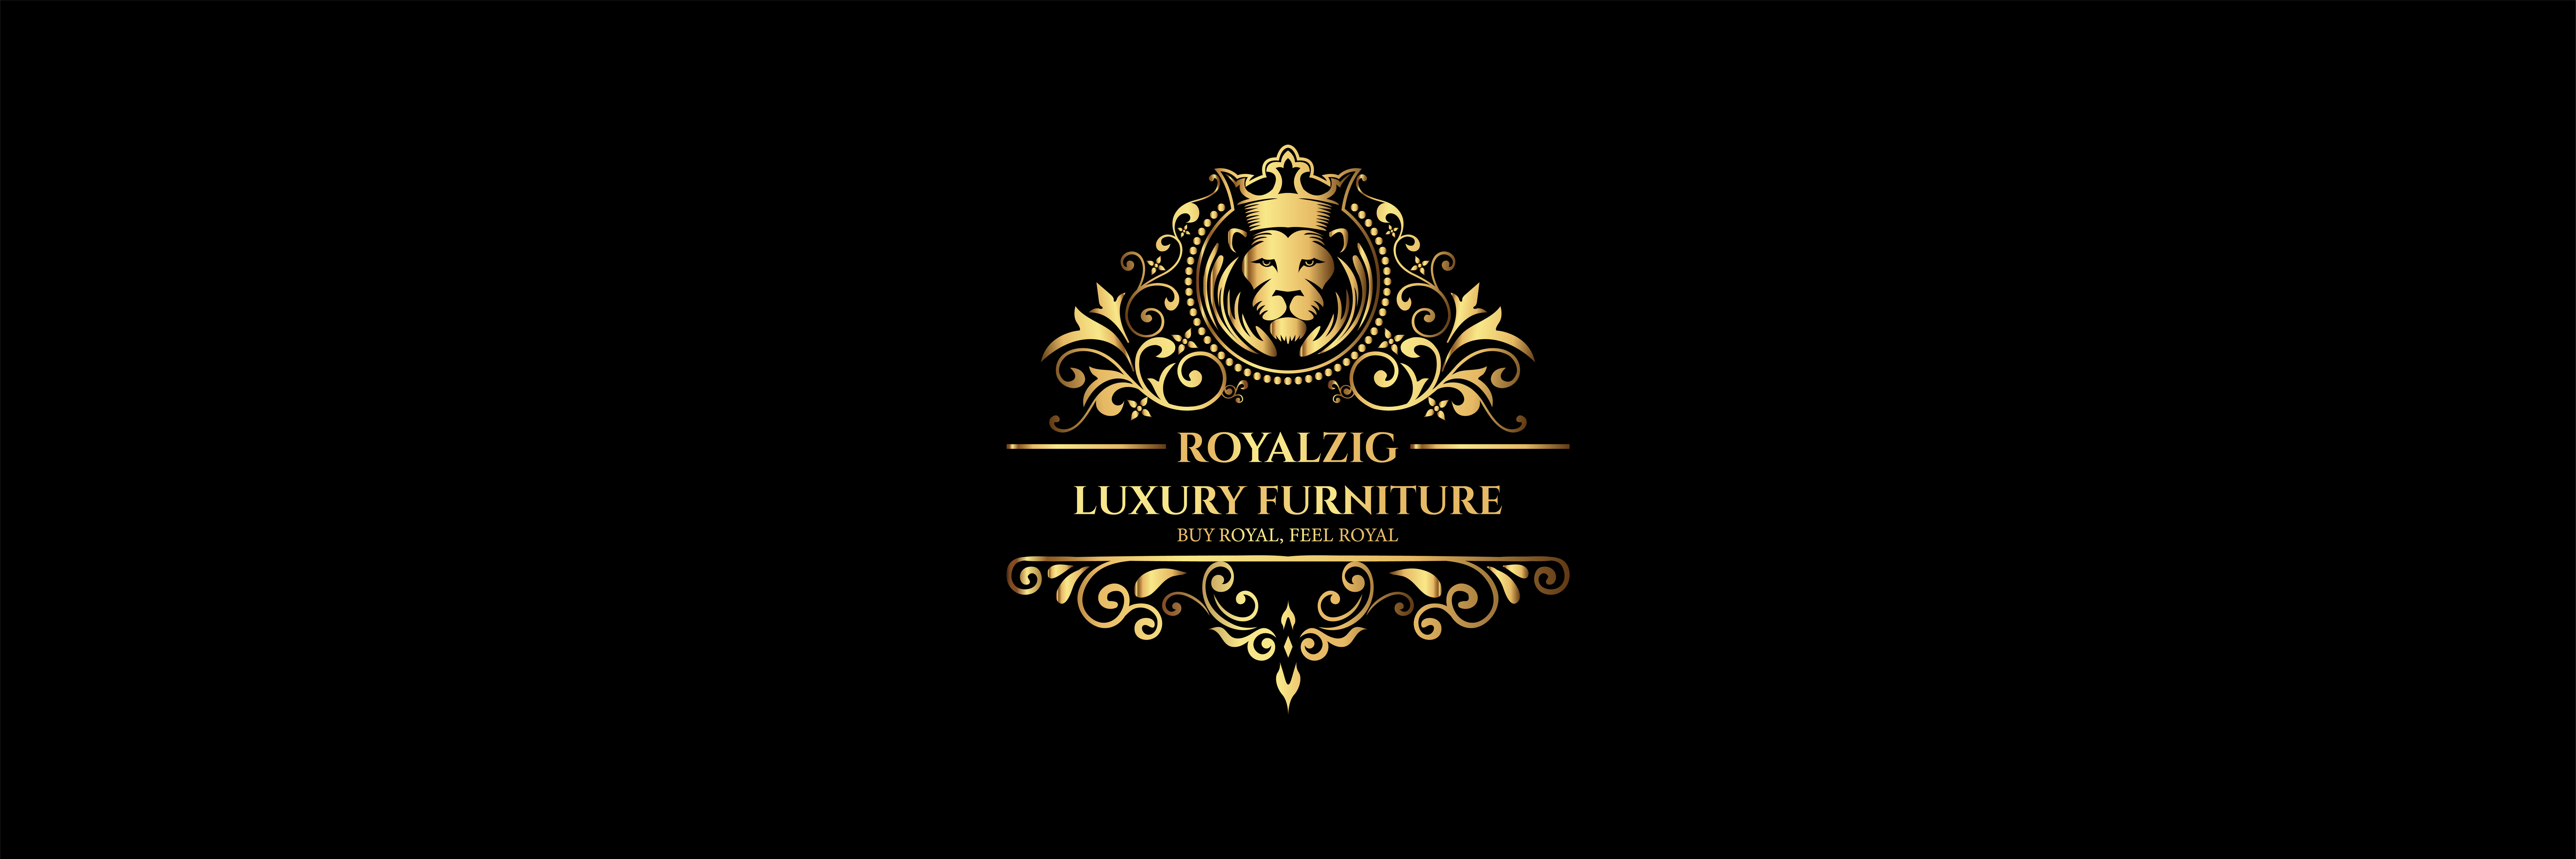 Classic Luxury Furniture Brand 